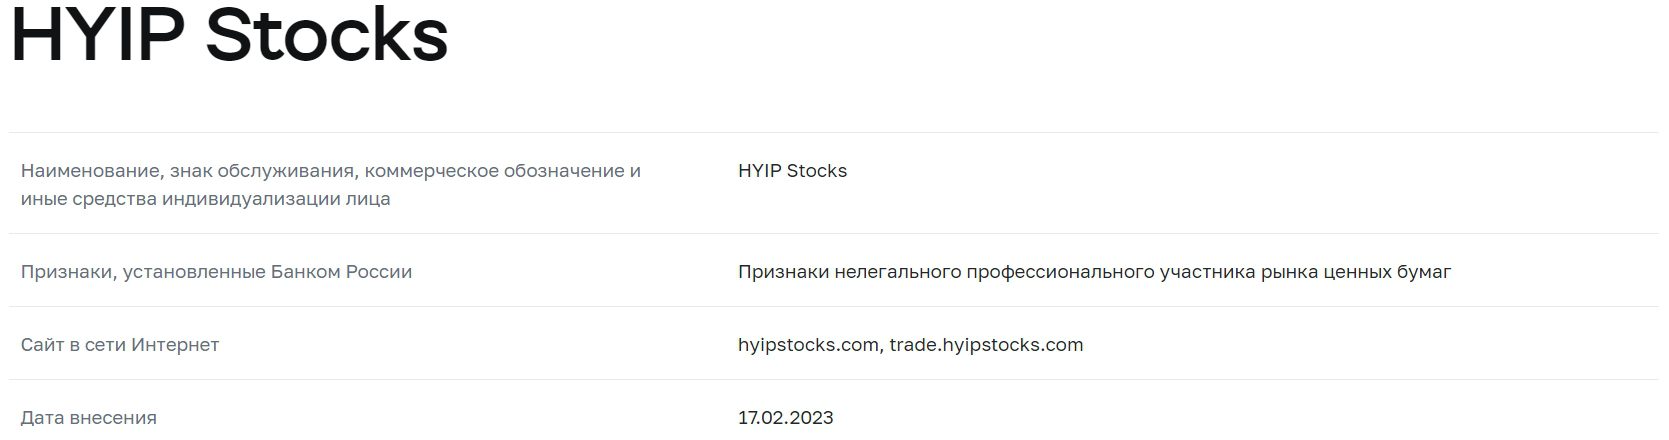 Trade Hyipstocks.com данные сайта